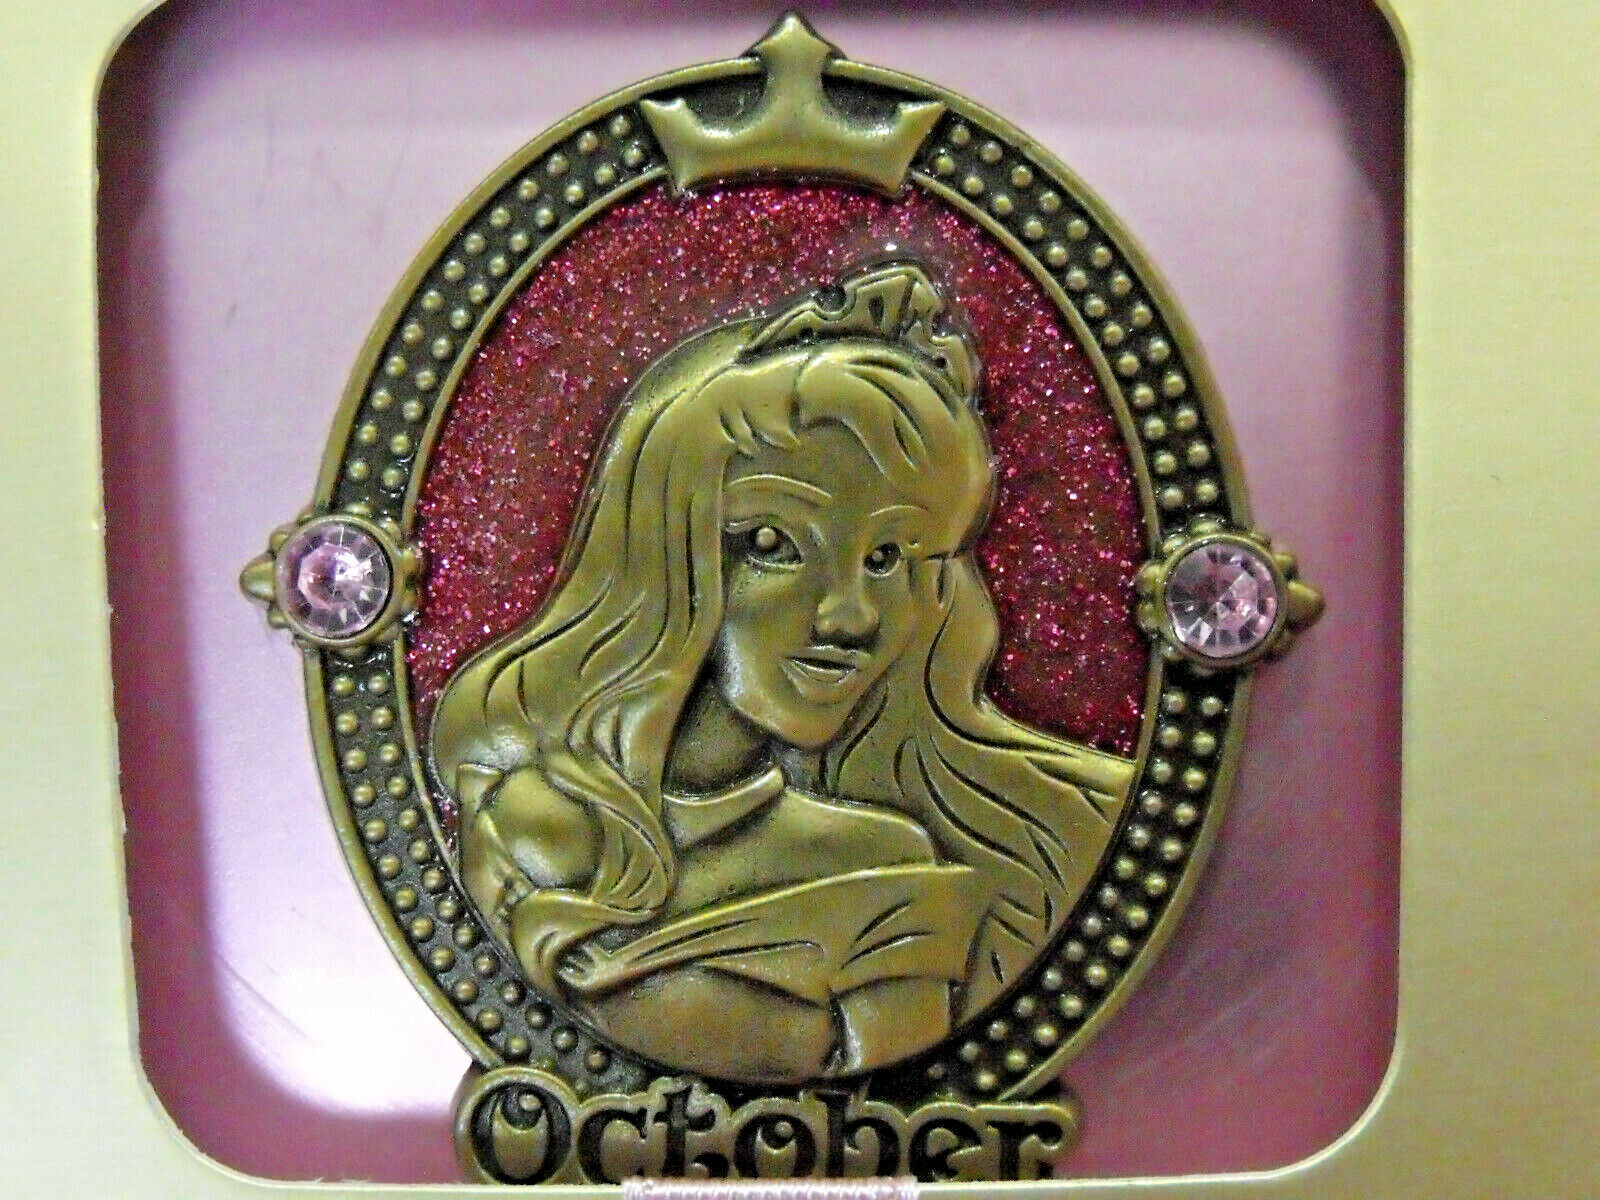 2016 New Disney Pin October Birthstone Opal Sleeping Beauty Princess Aurora NIB